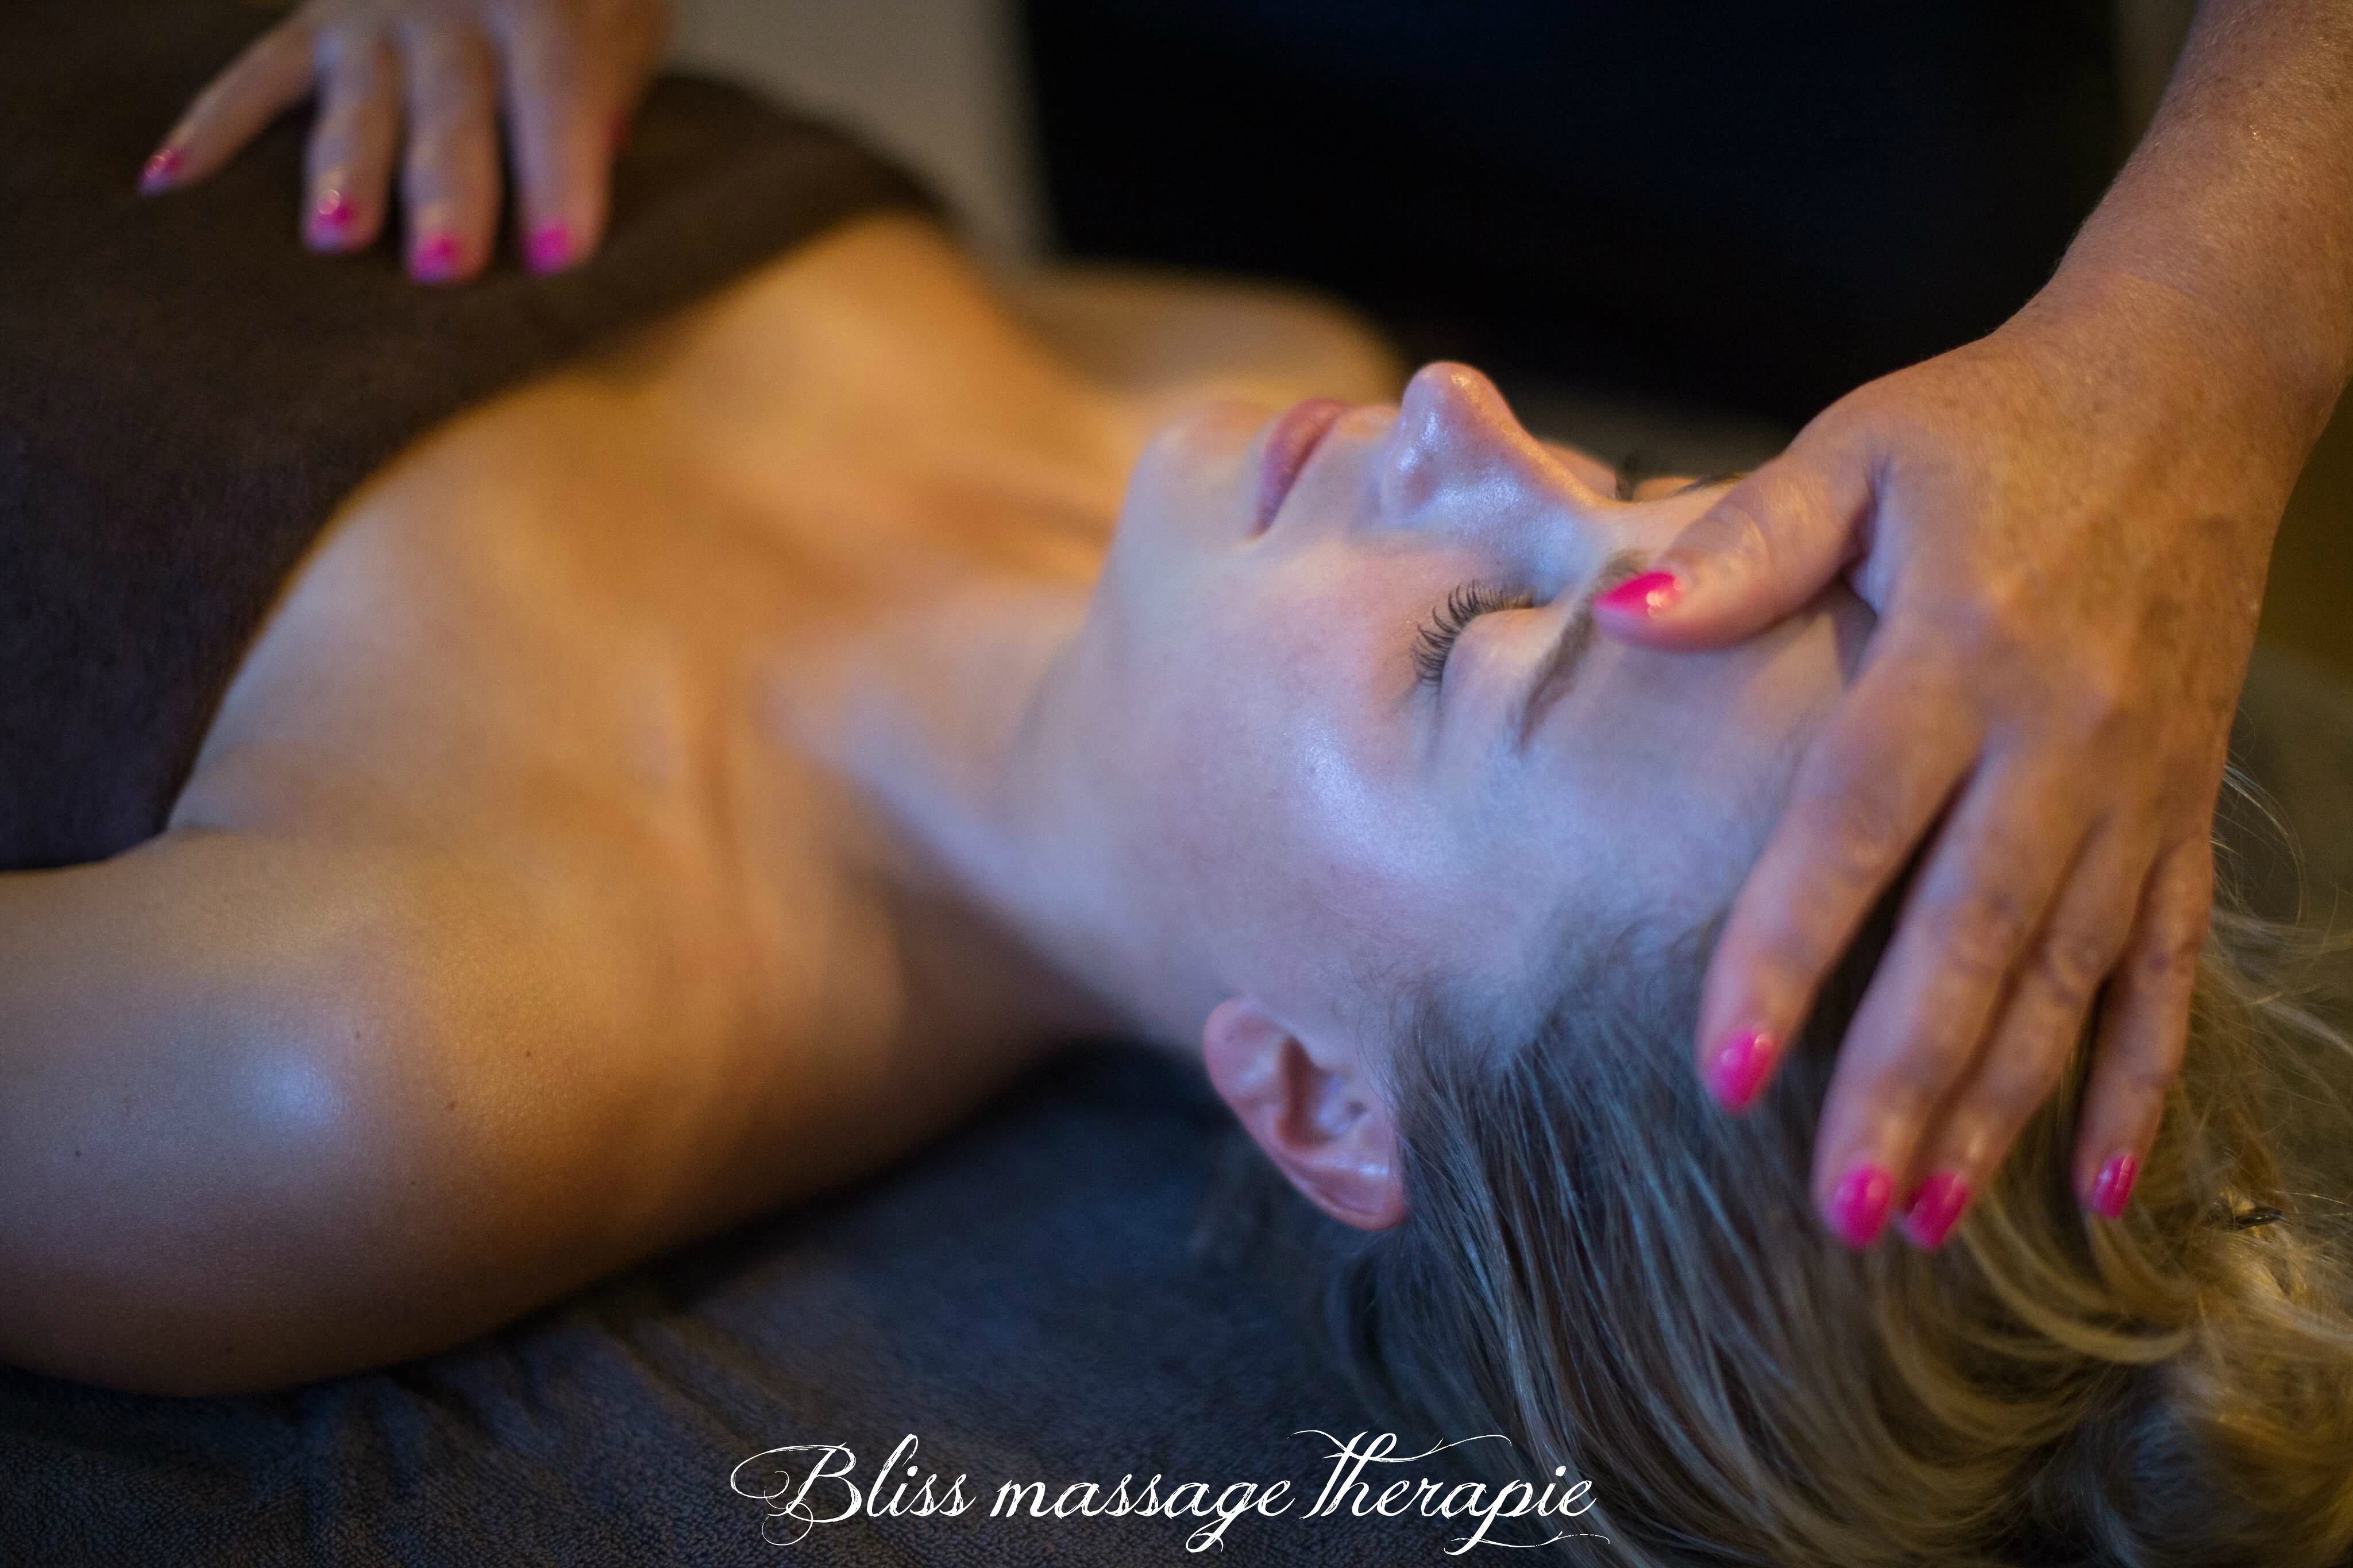 blissmassage therapie.jpg